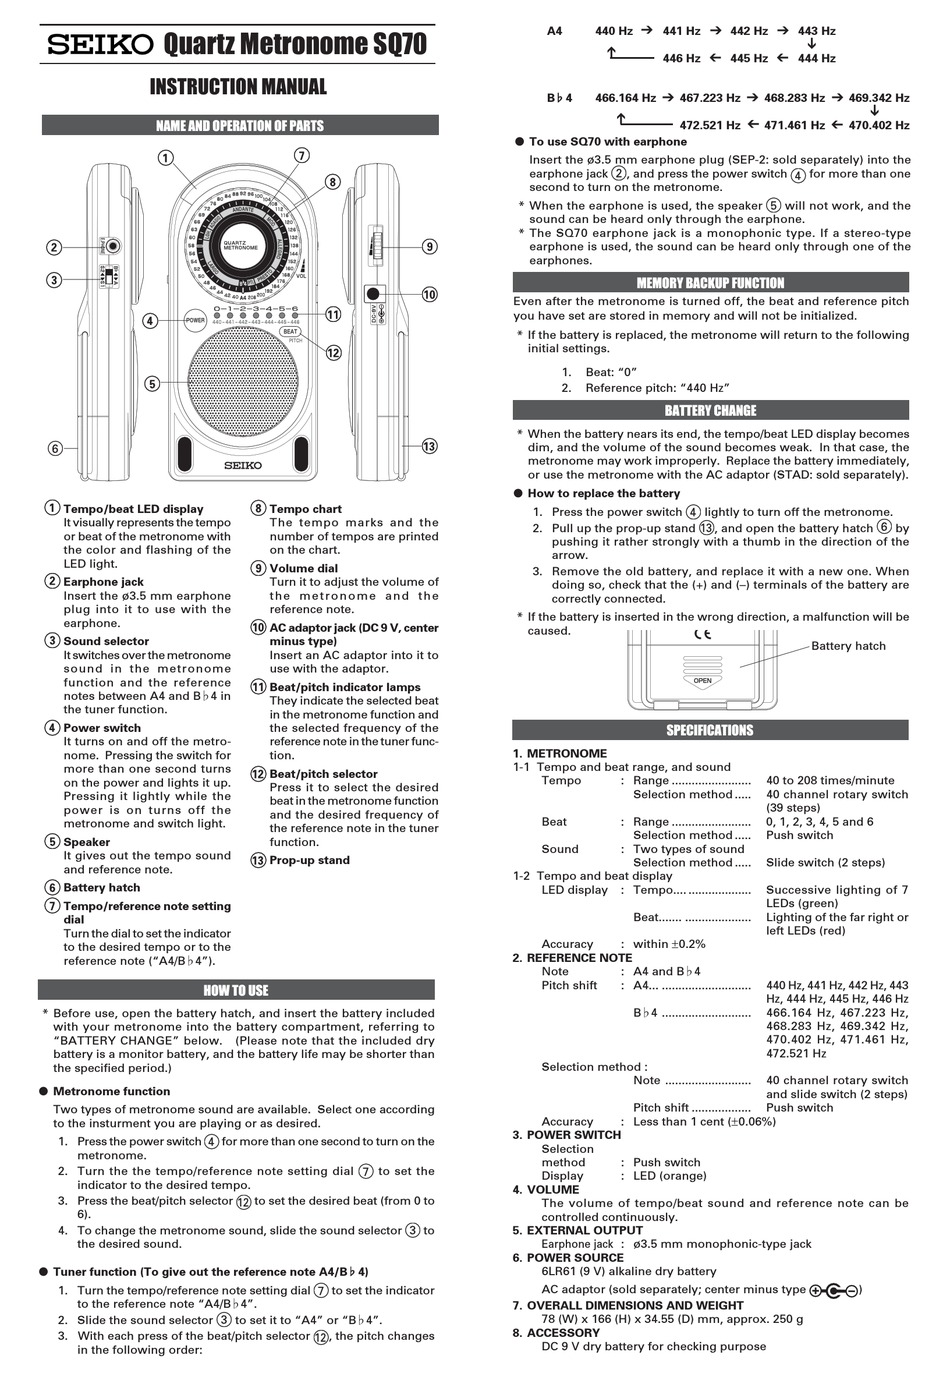 SEIKO QUARTZ METRONOME SQ70 INSTRUCTION MANUAL Pdf Download | ManualsLib